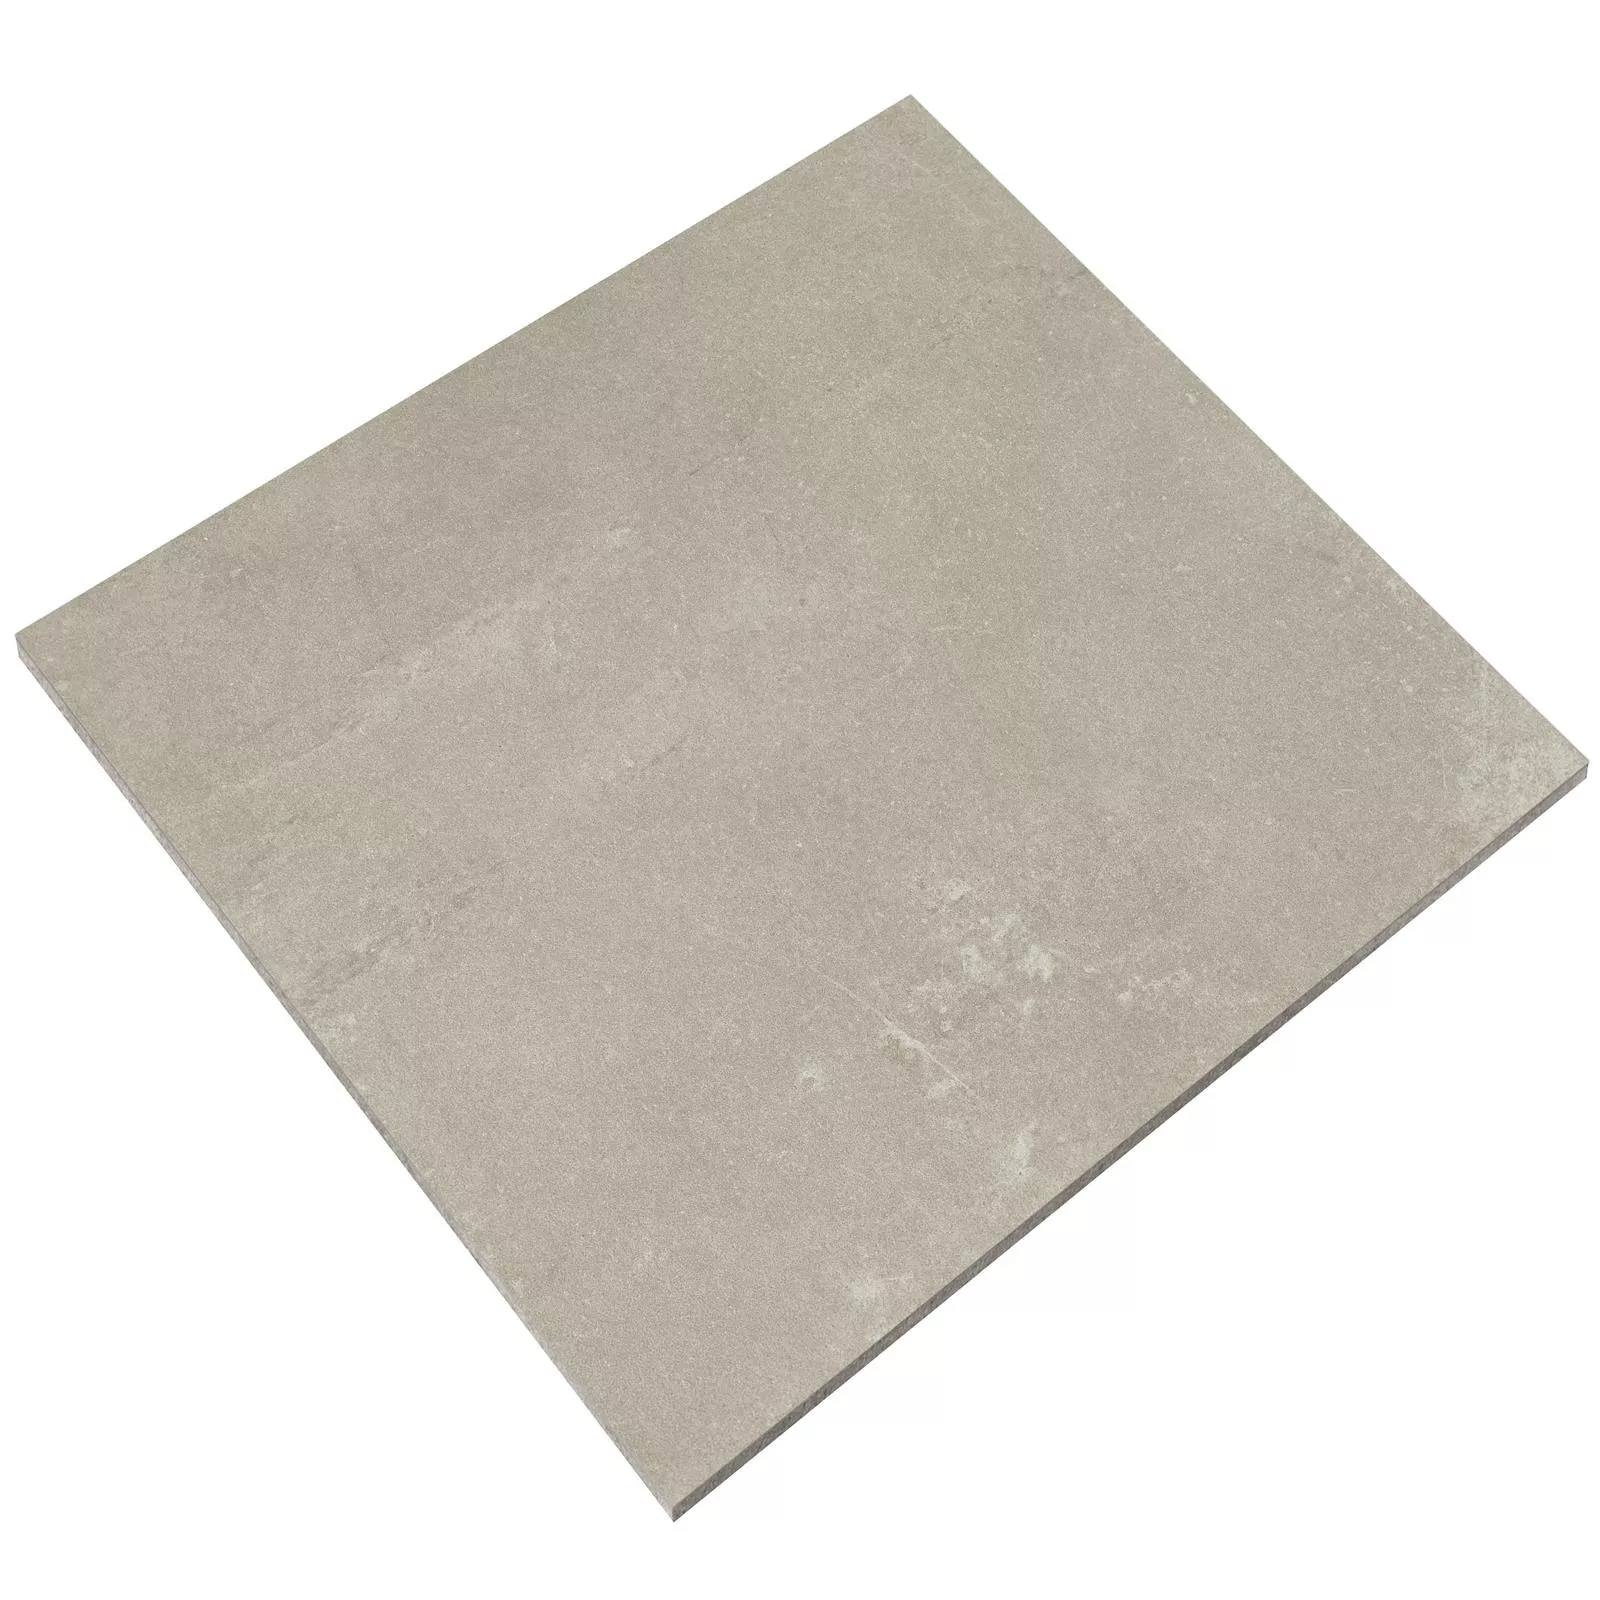 Sample Floor Tiles Cement Optic Nepal Slim Beige 100x100cm